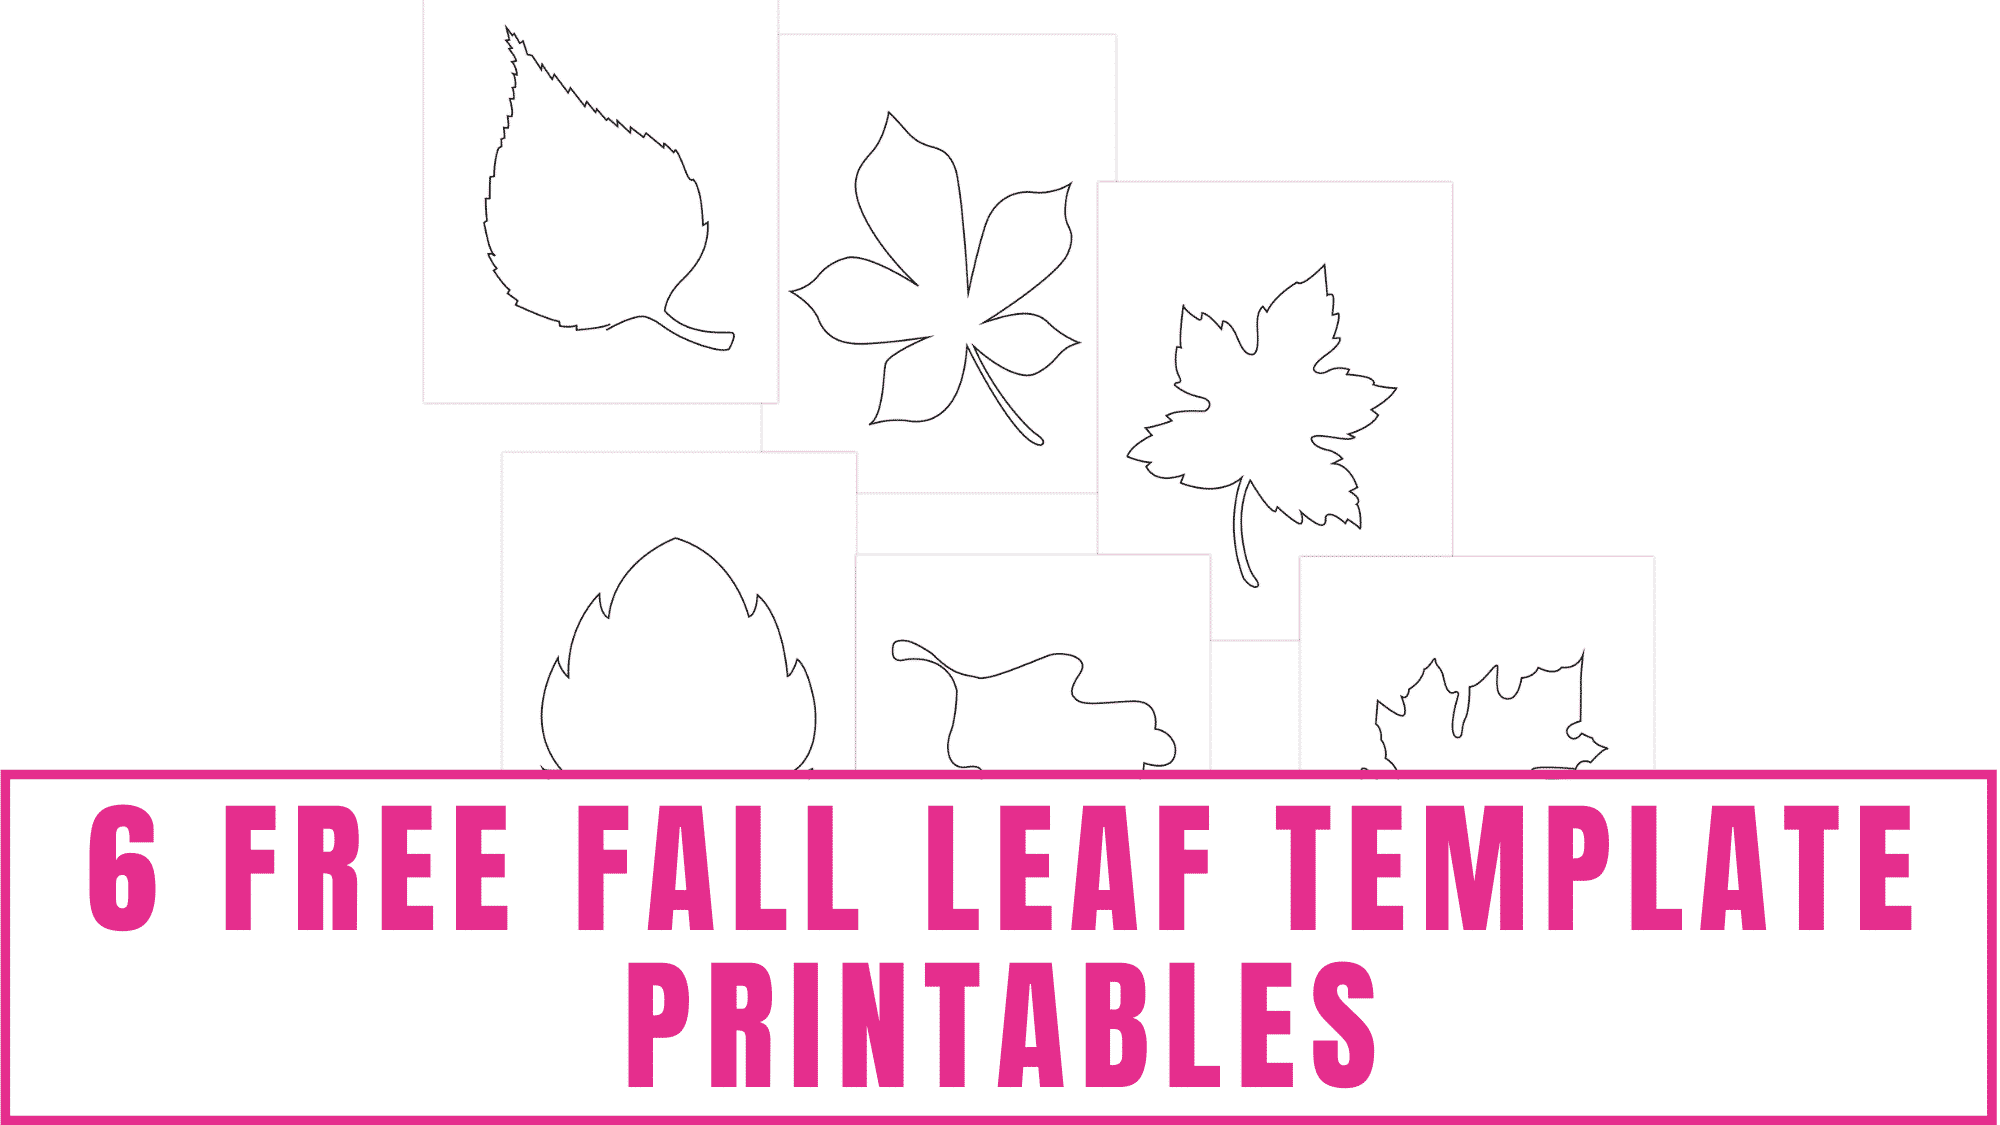 Free fall leaf template printables